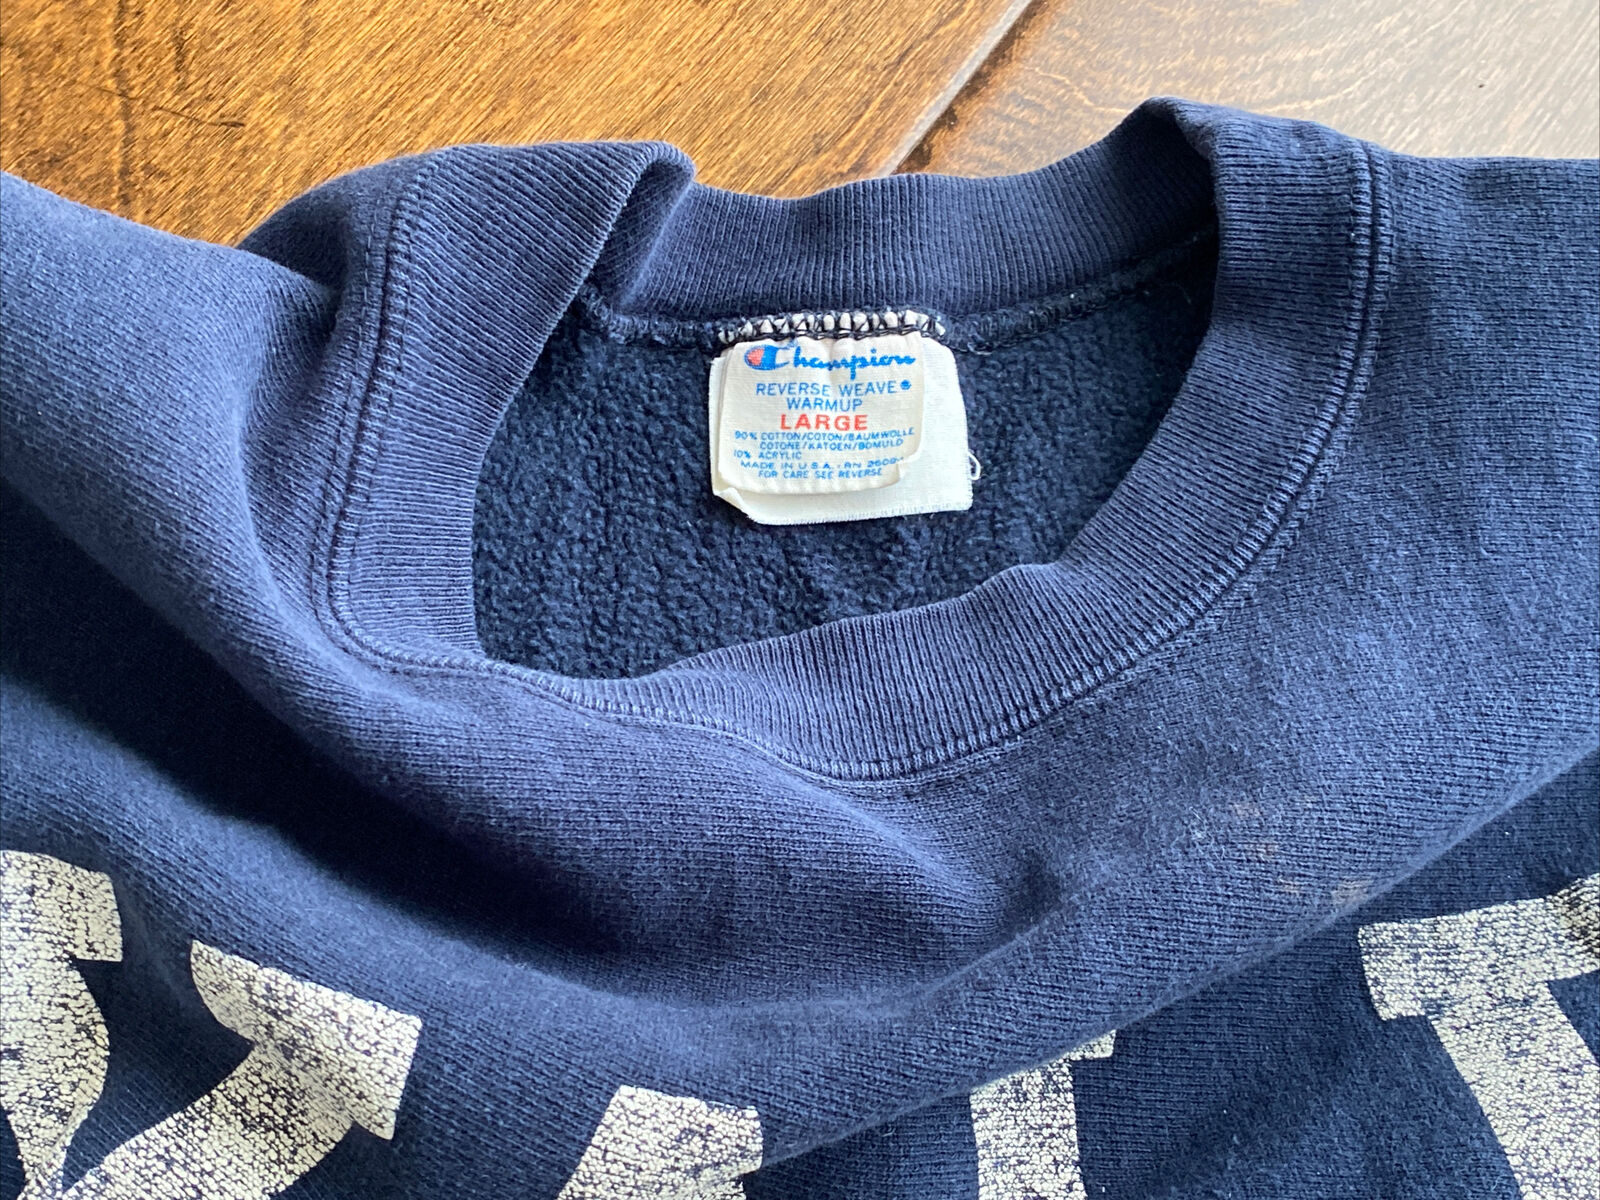 Vintage 1980’s MADE IN USA Yale Bulldogs champion reverse weave sweatshirt